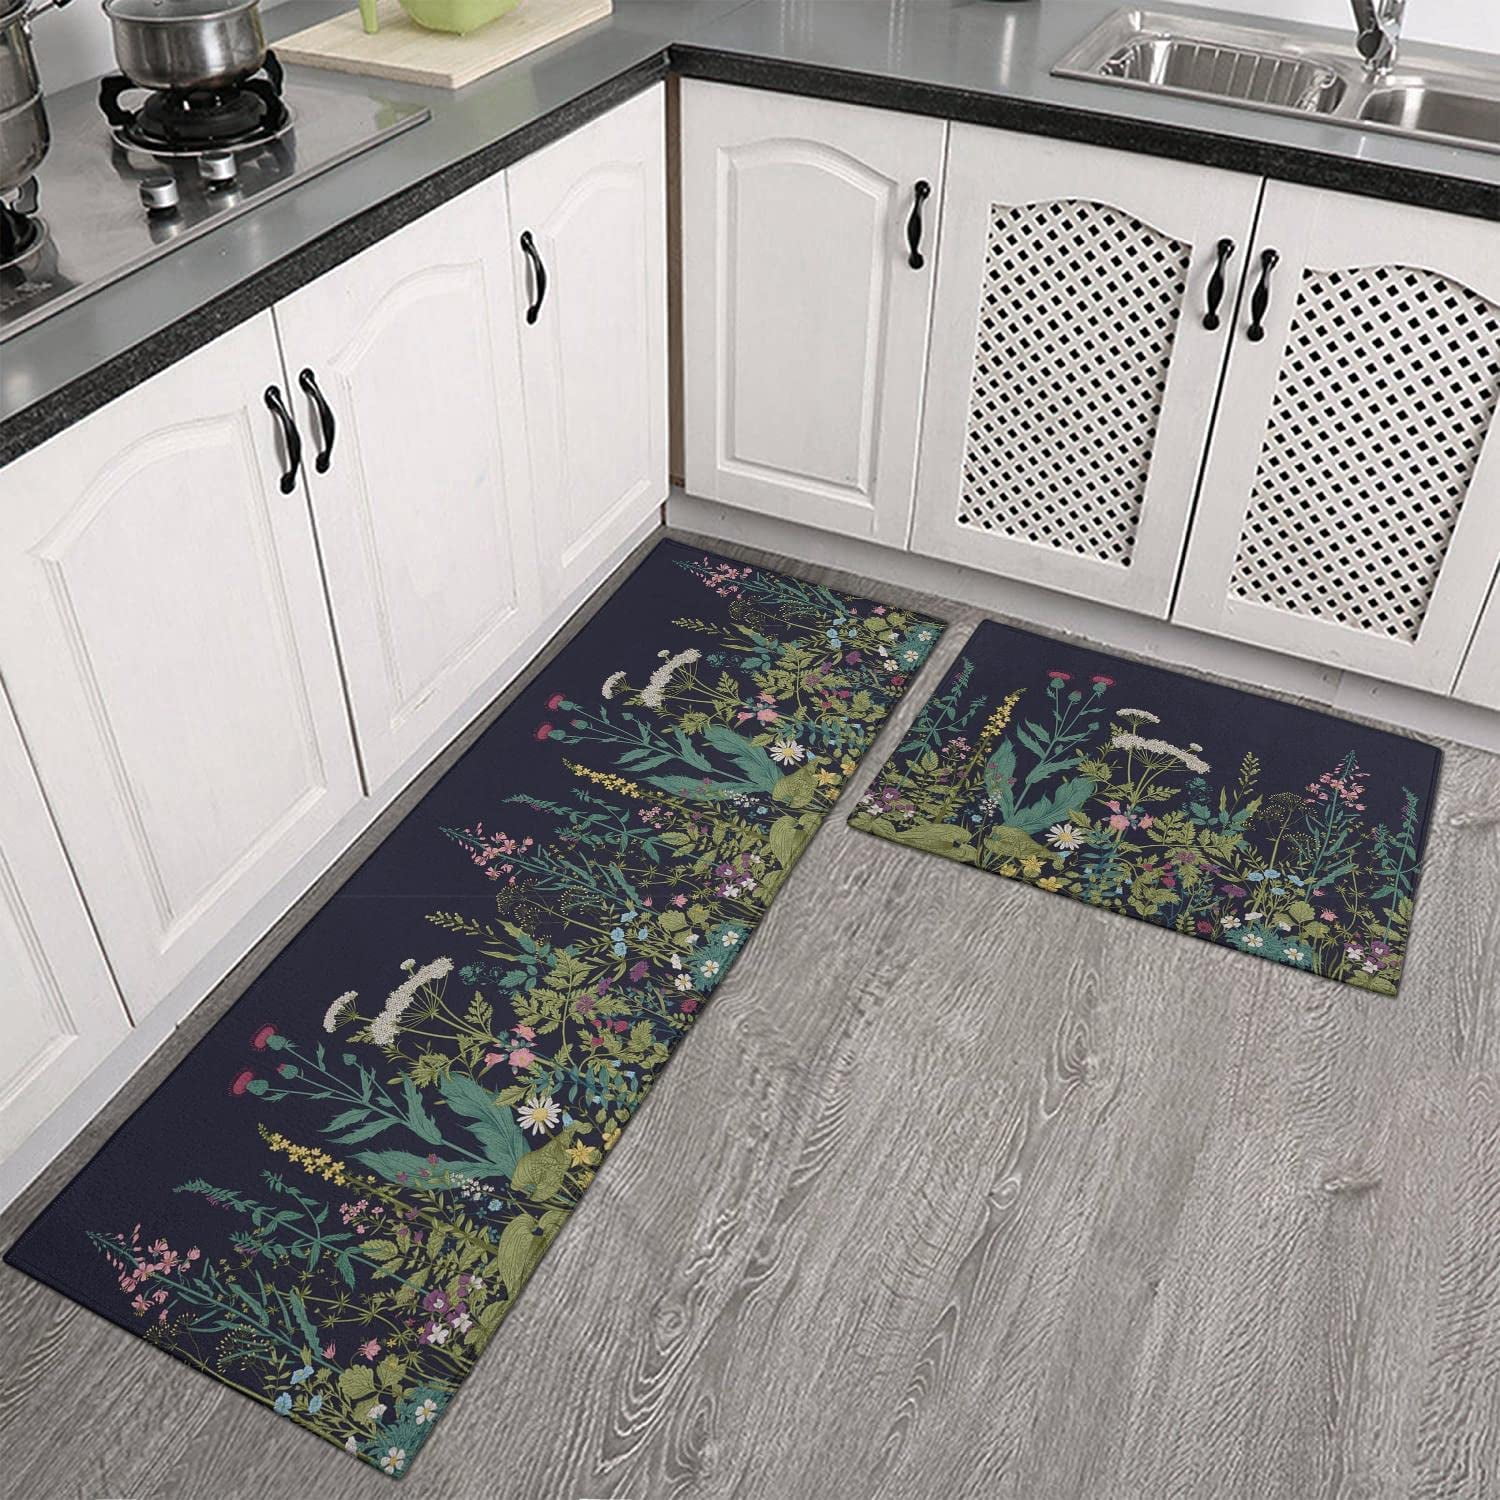 Gwnnb Kitchen Rugs and Mats Non Skid Kitchen Mat for Floor Washable  Absorbent Microfiber Anti Fatigue, Non-Slip Fat Chef Kitchen Decor Doormat  Runner